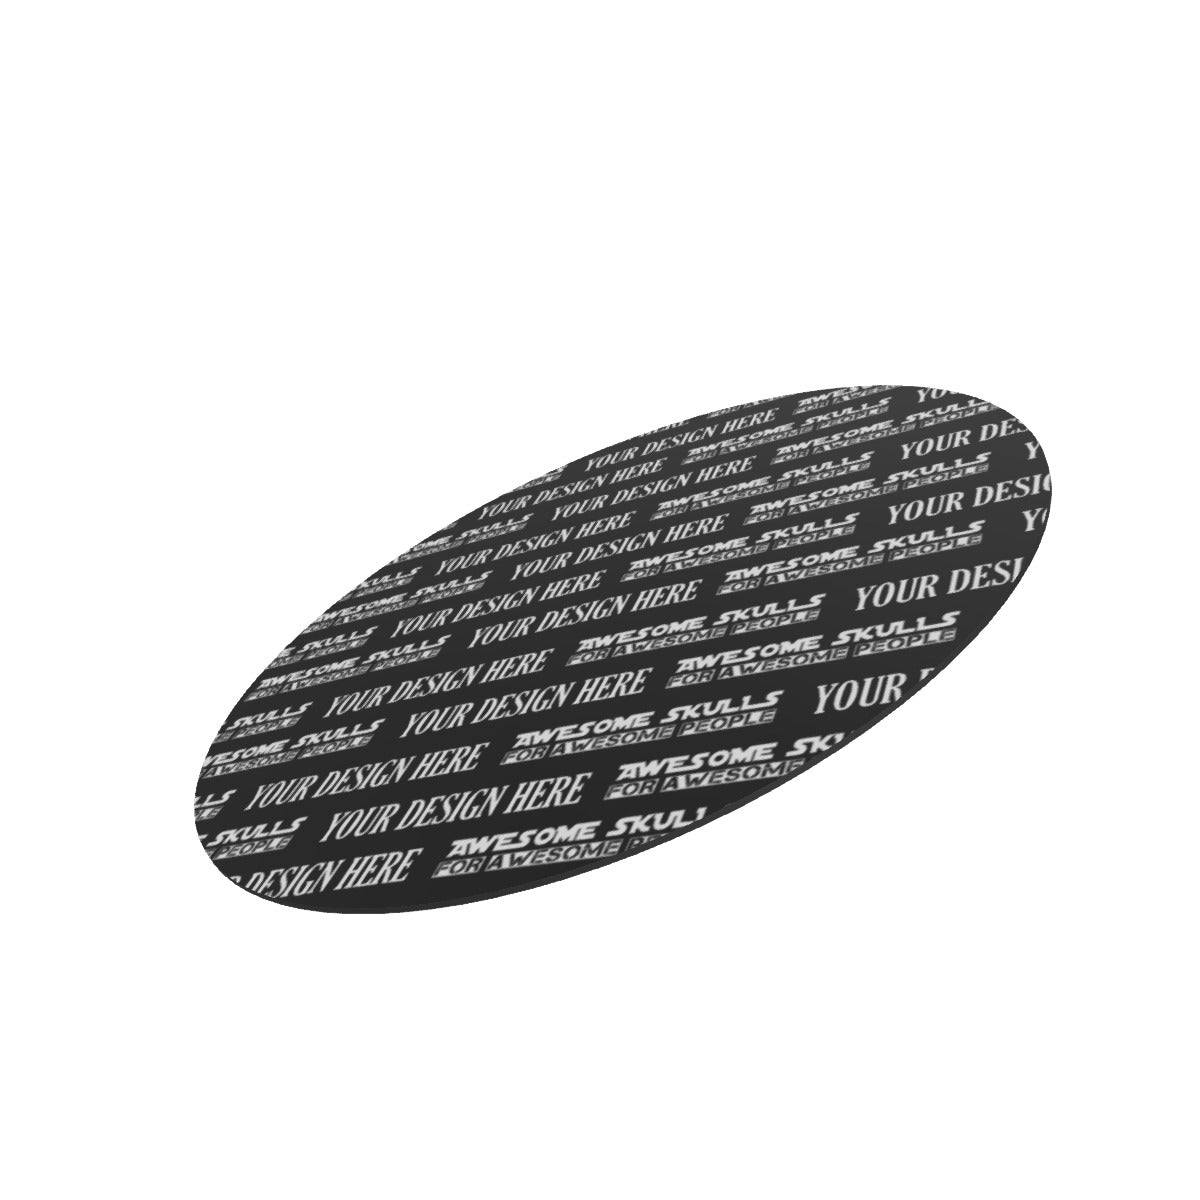 Custom Print on demand POD Round mouse pad